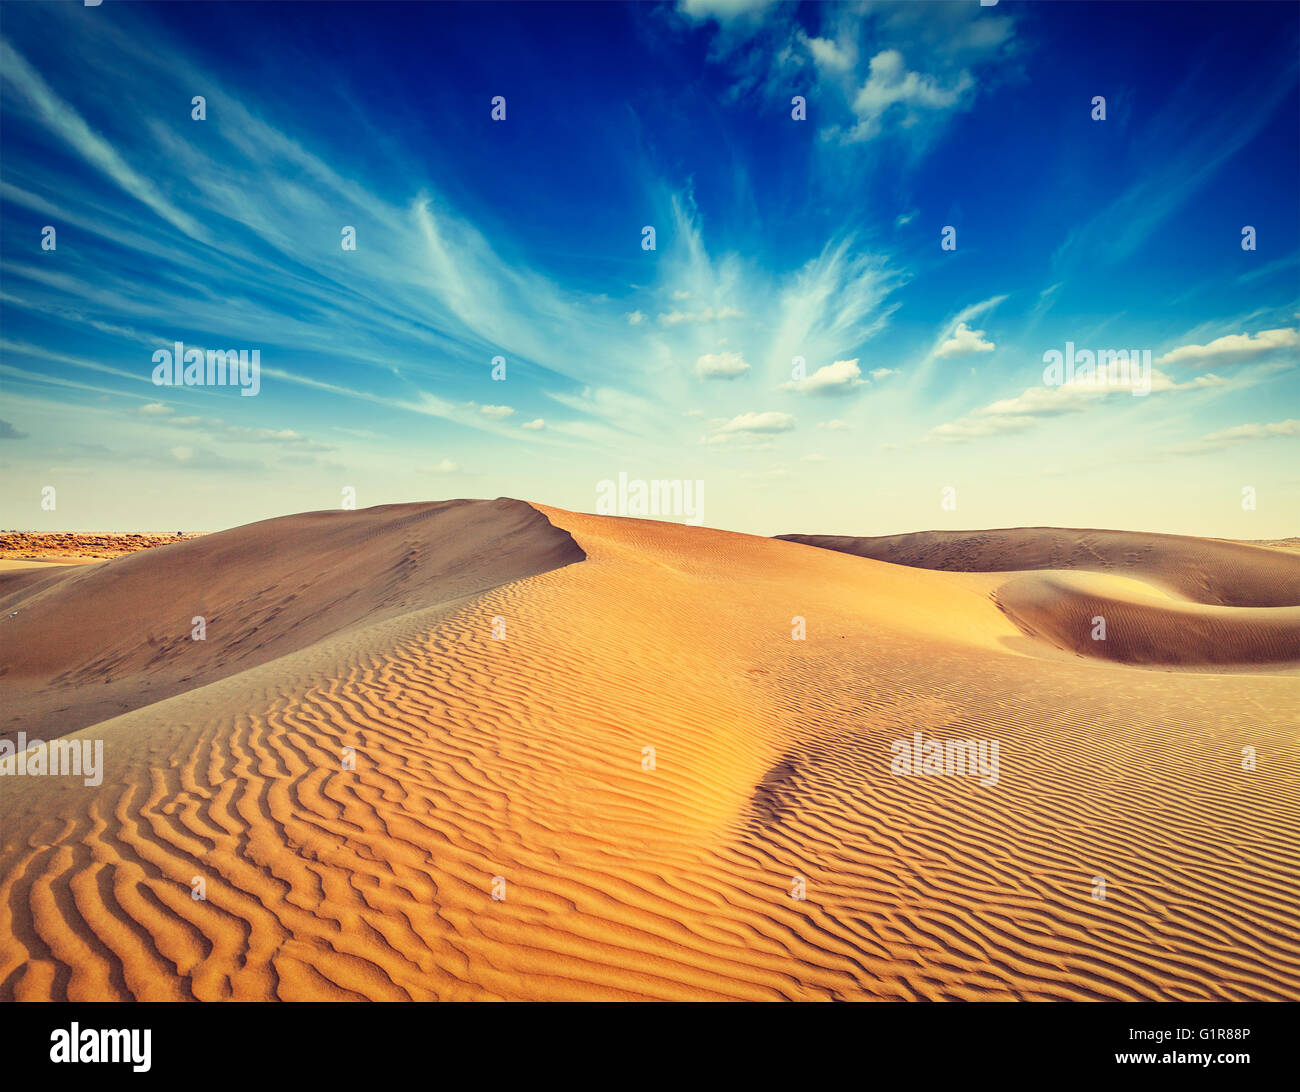 Sand dunes in desert Banque D'Images